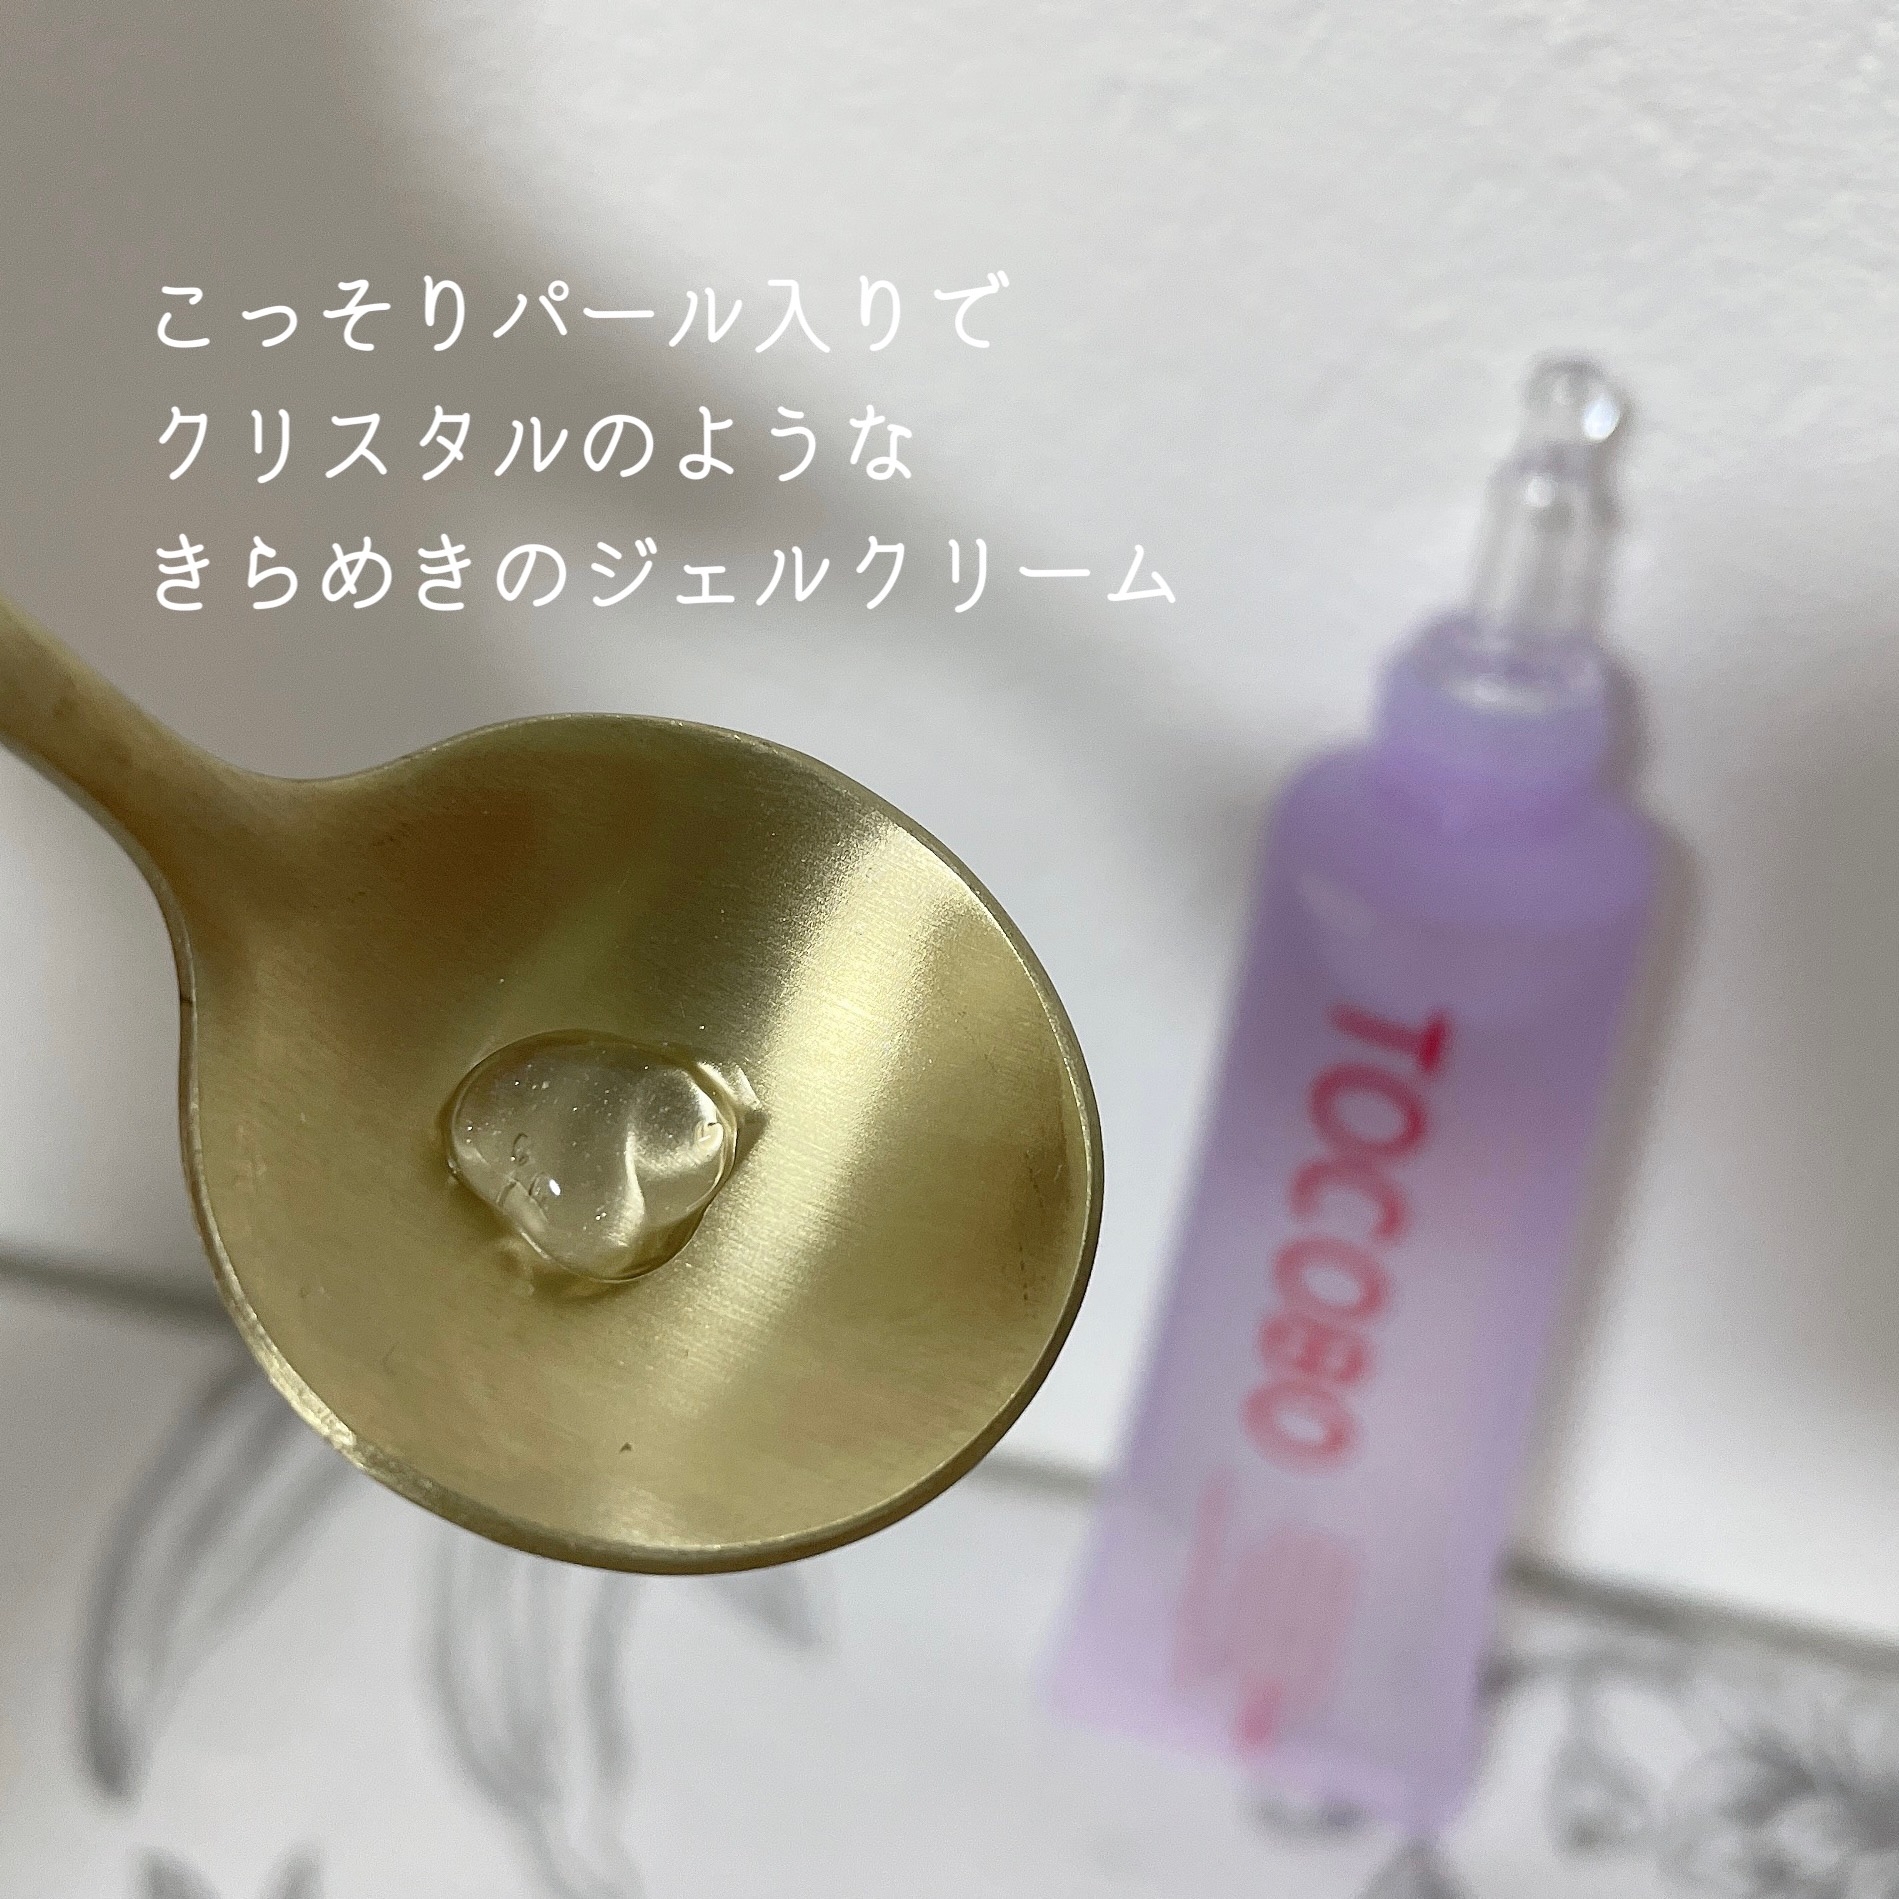 TOCOBO(トコボ) コラーゲンブライトニングアイジェルクリームの良い点・メリットに関するもいさんの口コミ画像3